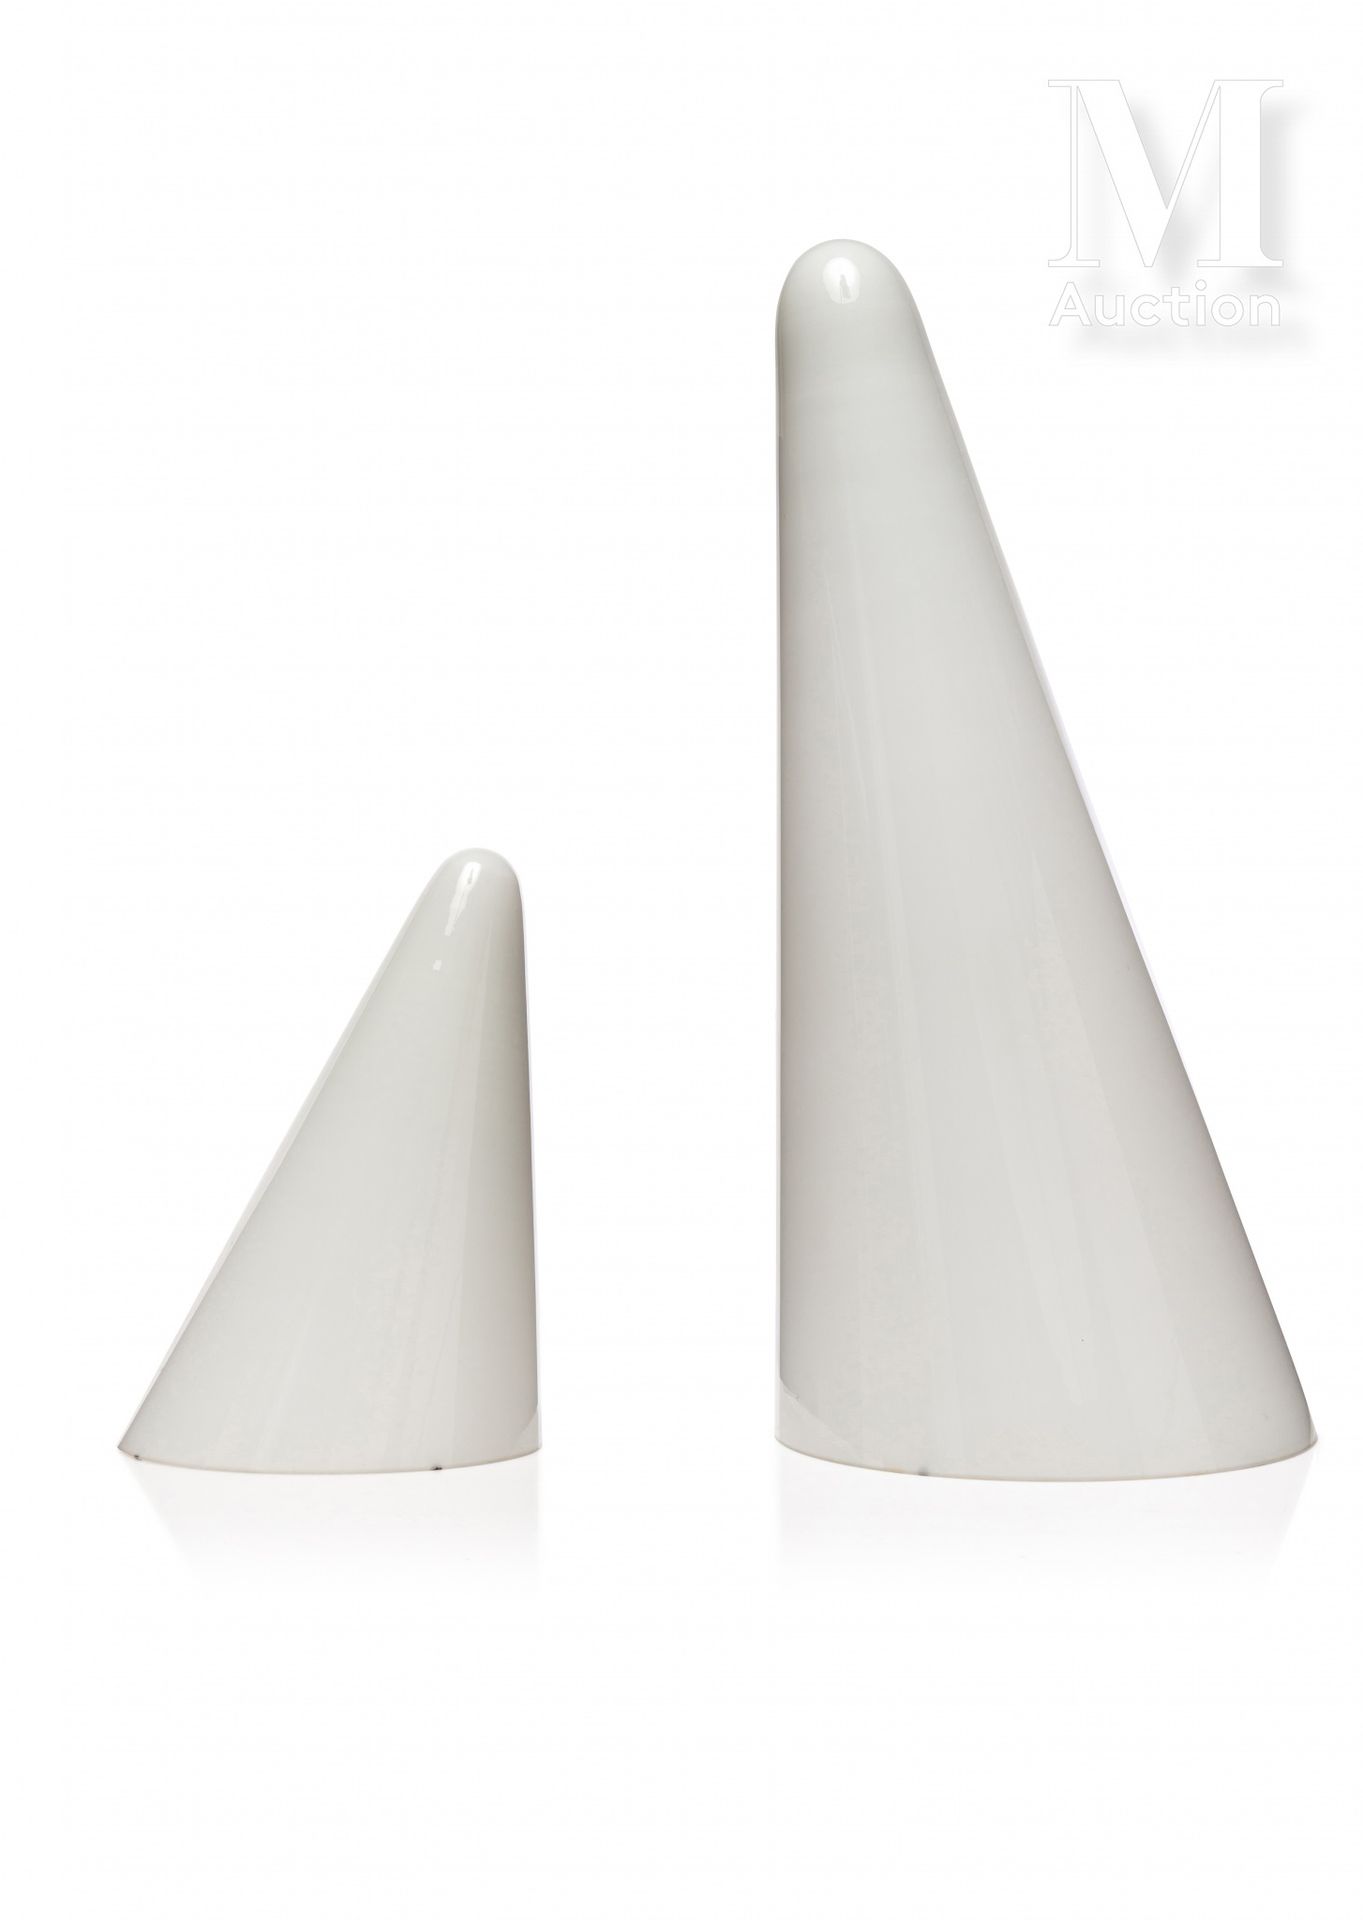 SCE éditeur France 法国SCE出版社

"Teepee

一套两盏白色乳白玻璃灯。

高：35厘米和75厘米



一套白色乳白玻璃 "Tee&hellip;